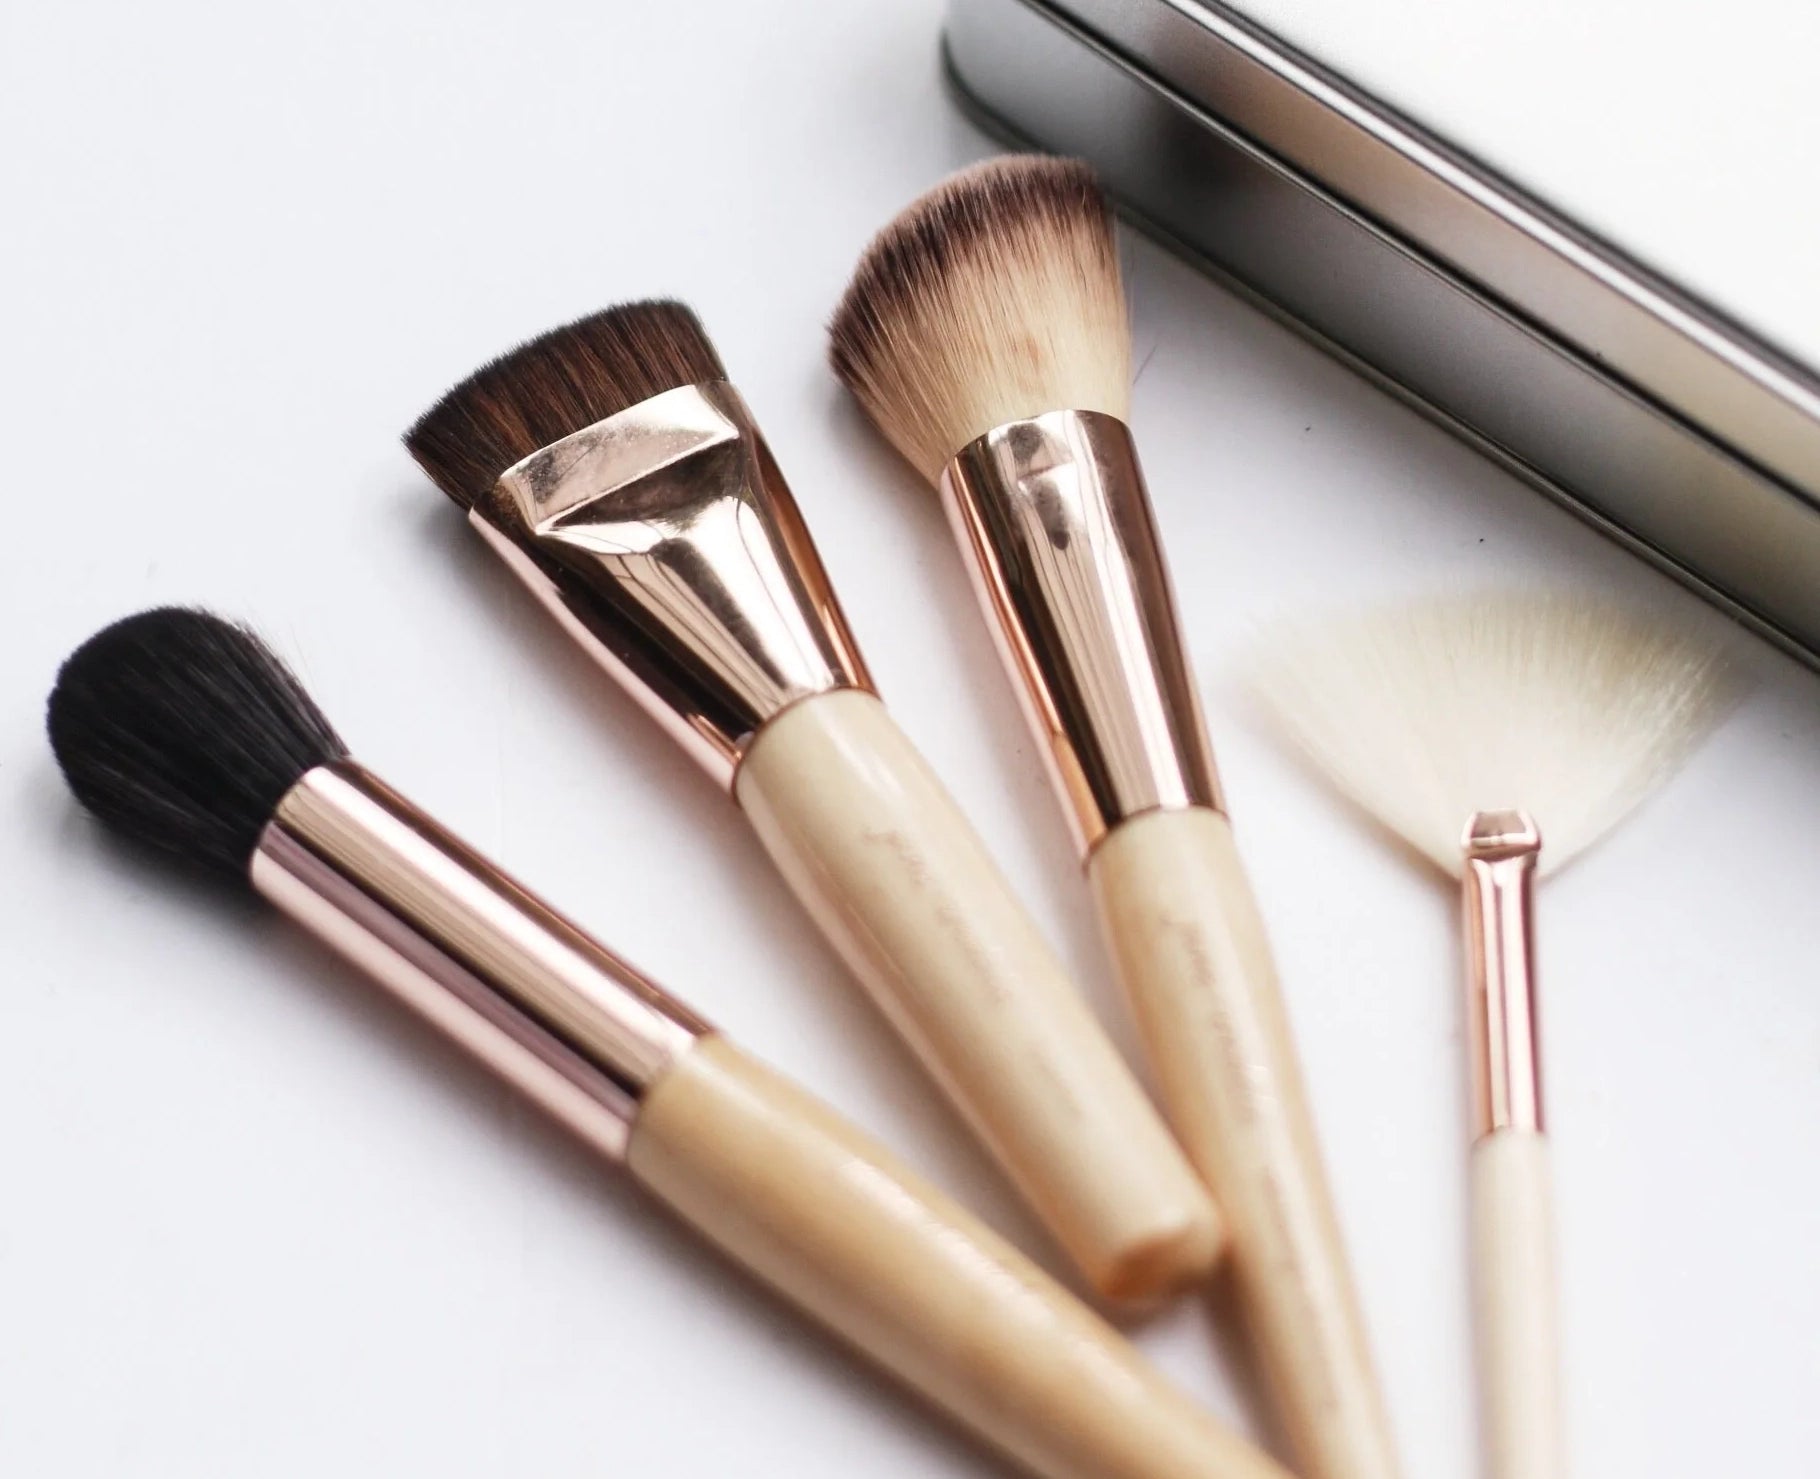 Blush, Bronzer and Highlighter Makeup Brushes